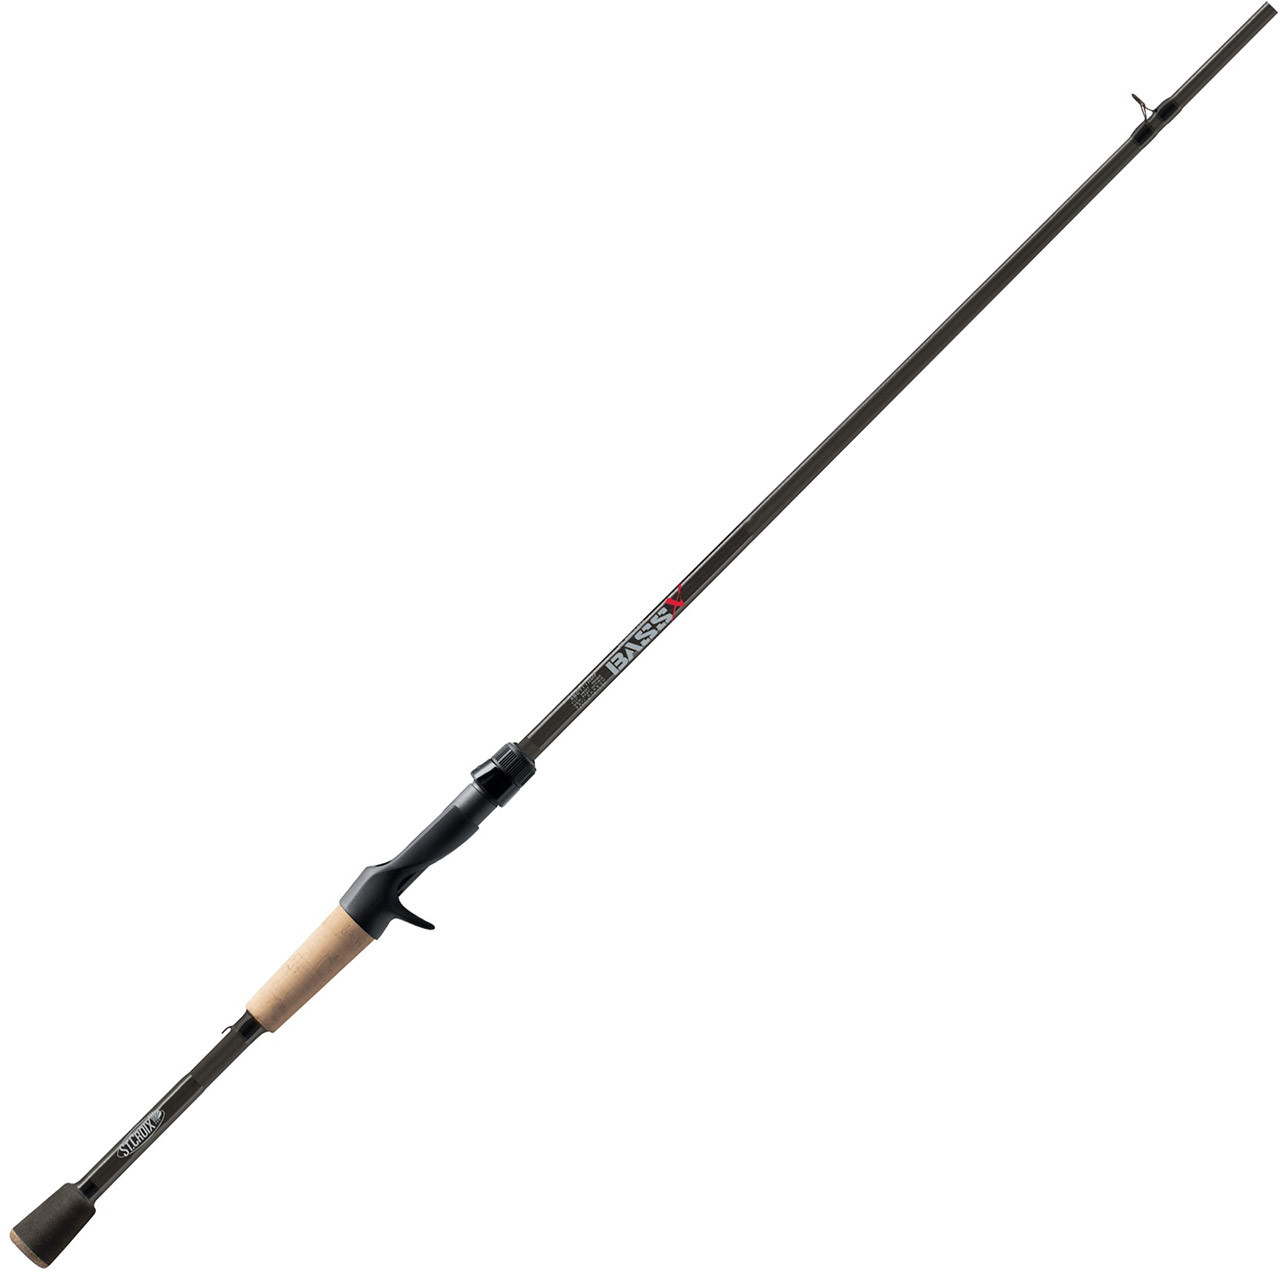 St. Croix Bass x Casting Rod